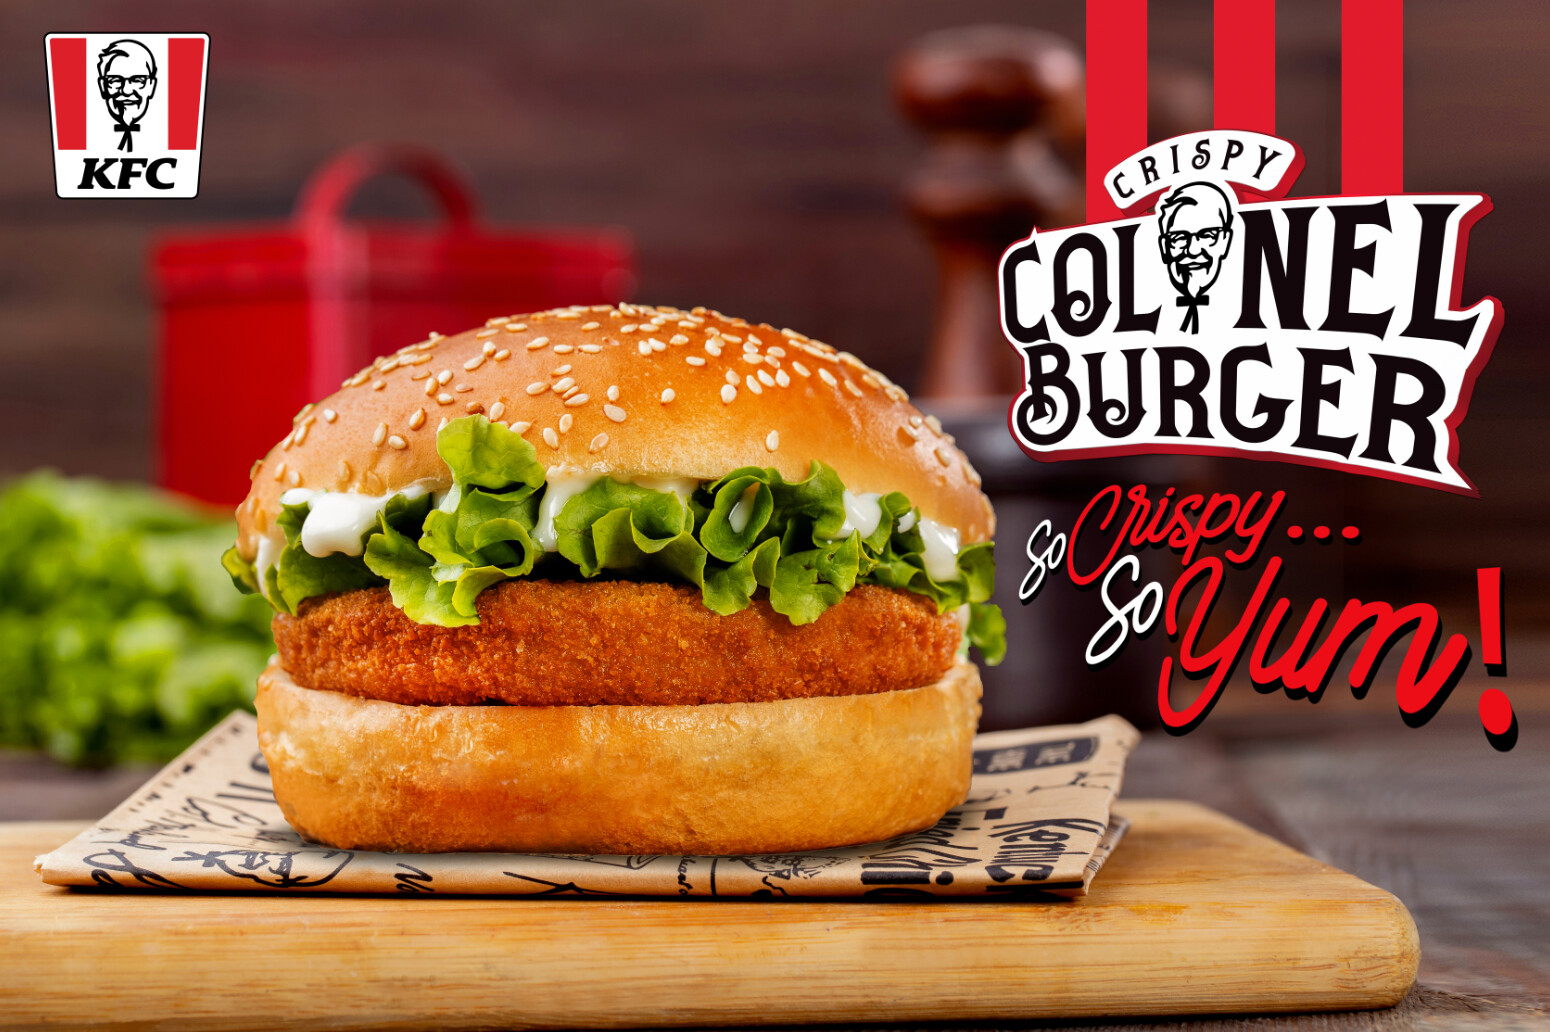 Colonel burger kfc